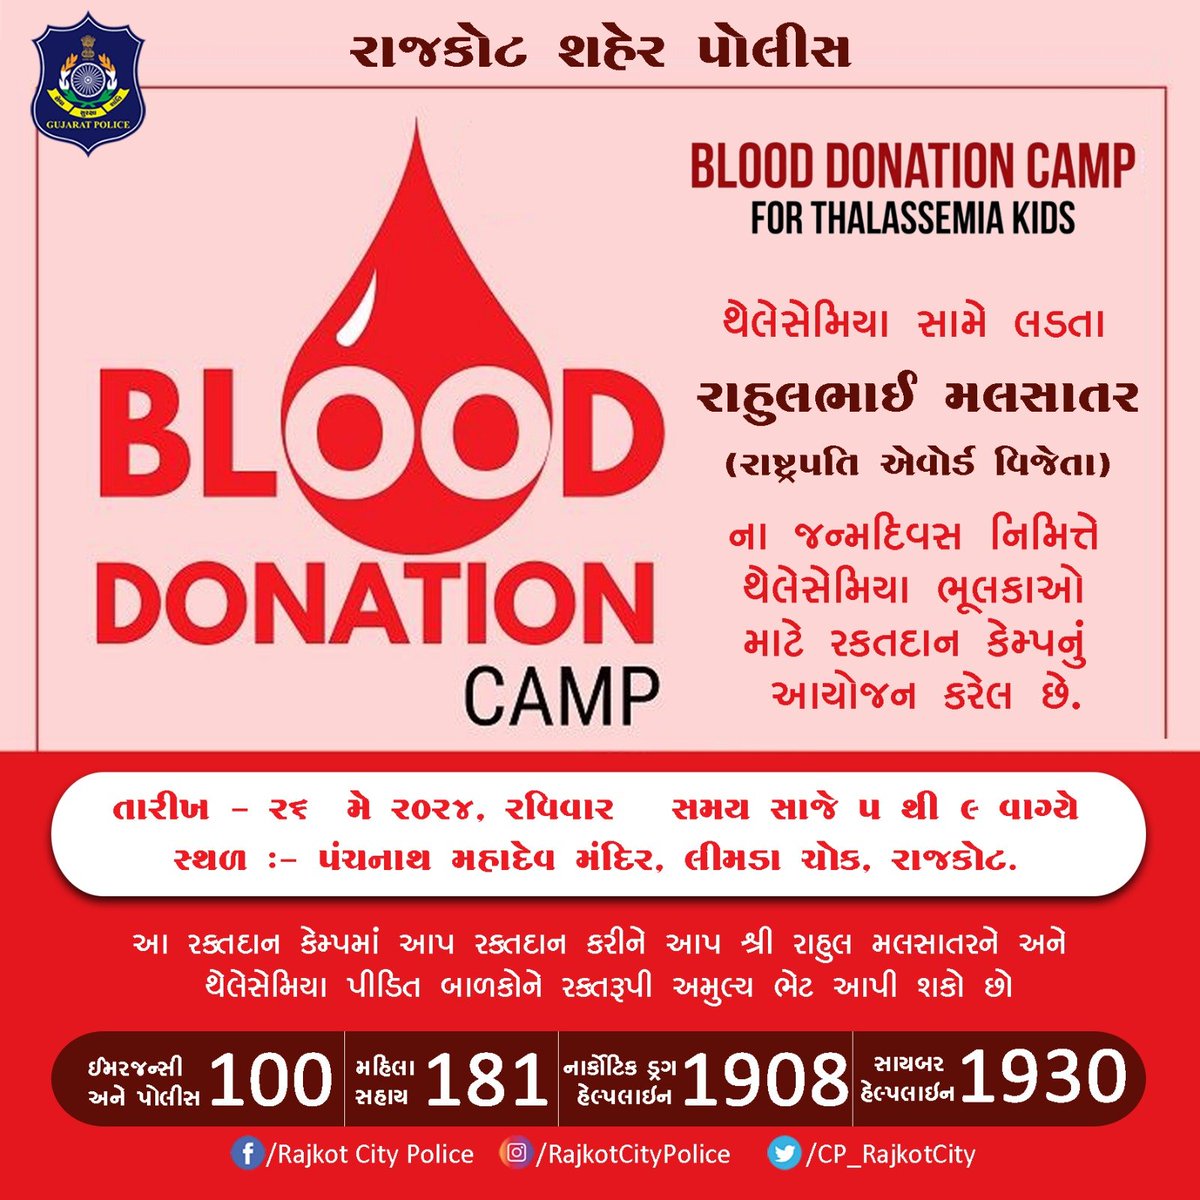 BLOOD DONATION CAMP FOR THALASSEMIA KIDS 

#Rajkot #RajkotCityPolice #Gujarat #GujaratPolice #blooddonation #blood #blooddonor #donateblood #giveblood #blooddonors @GujaratPolice @dgpgujarat